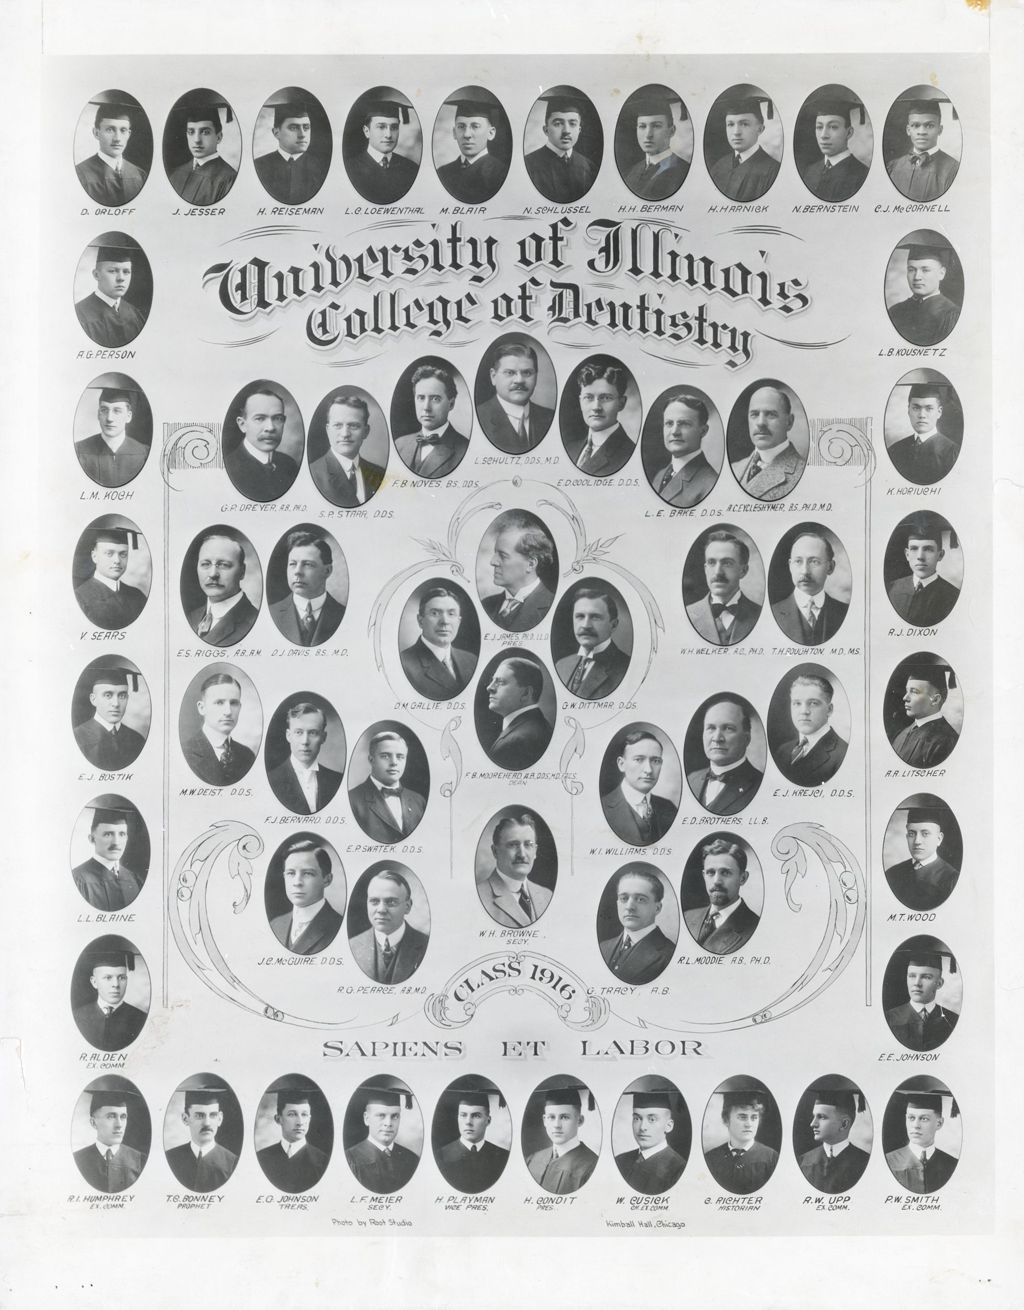 1916 graduating class, University of Illinois College of Dentistry